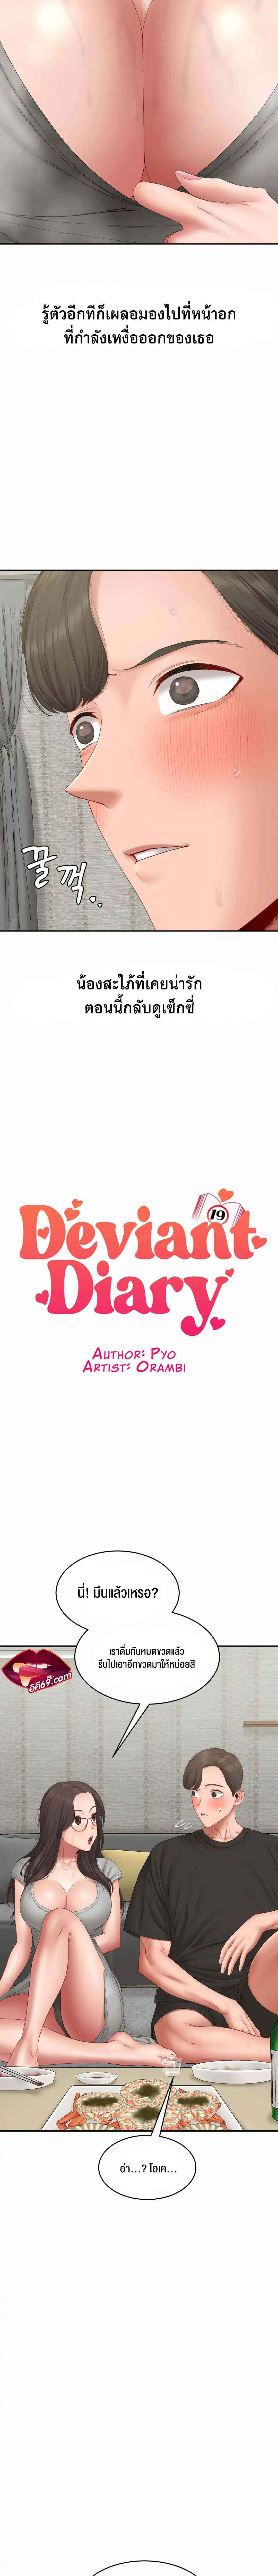 Deviant Diary 34 04